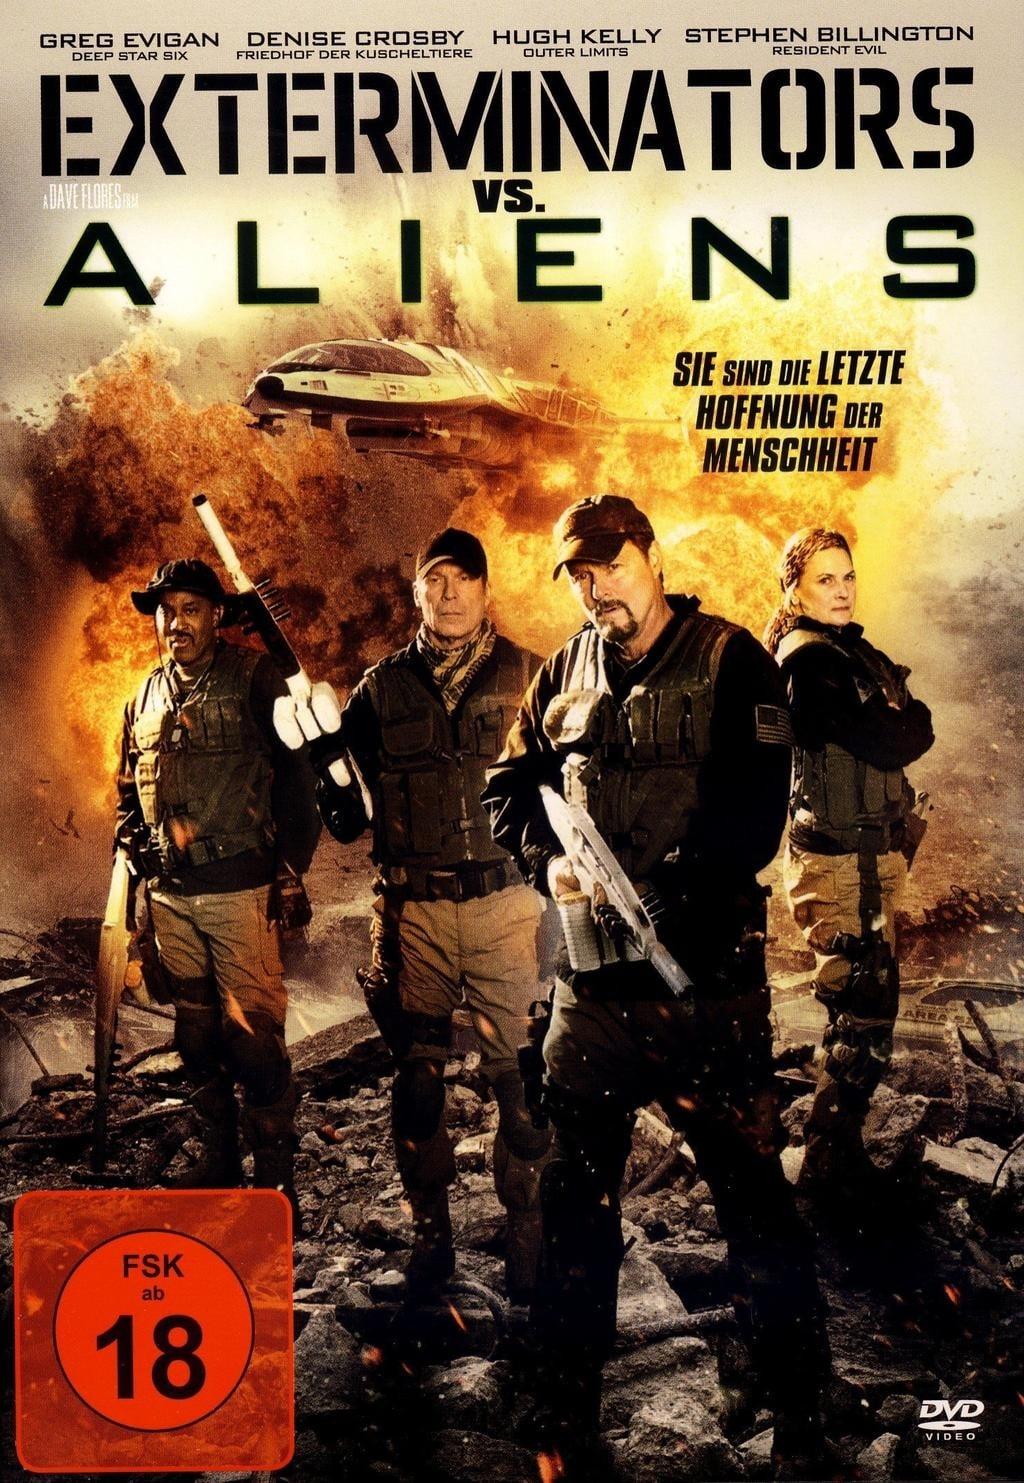 Exterminators vs. Aliens poster